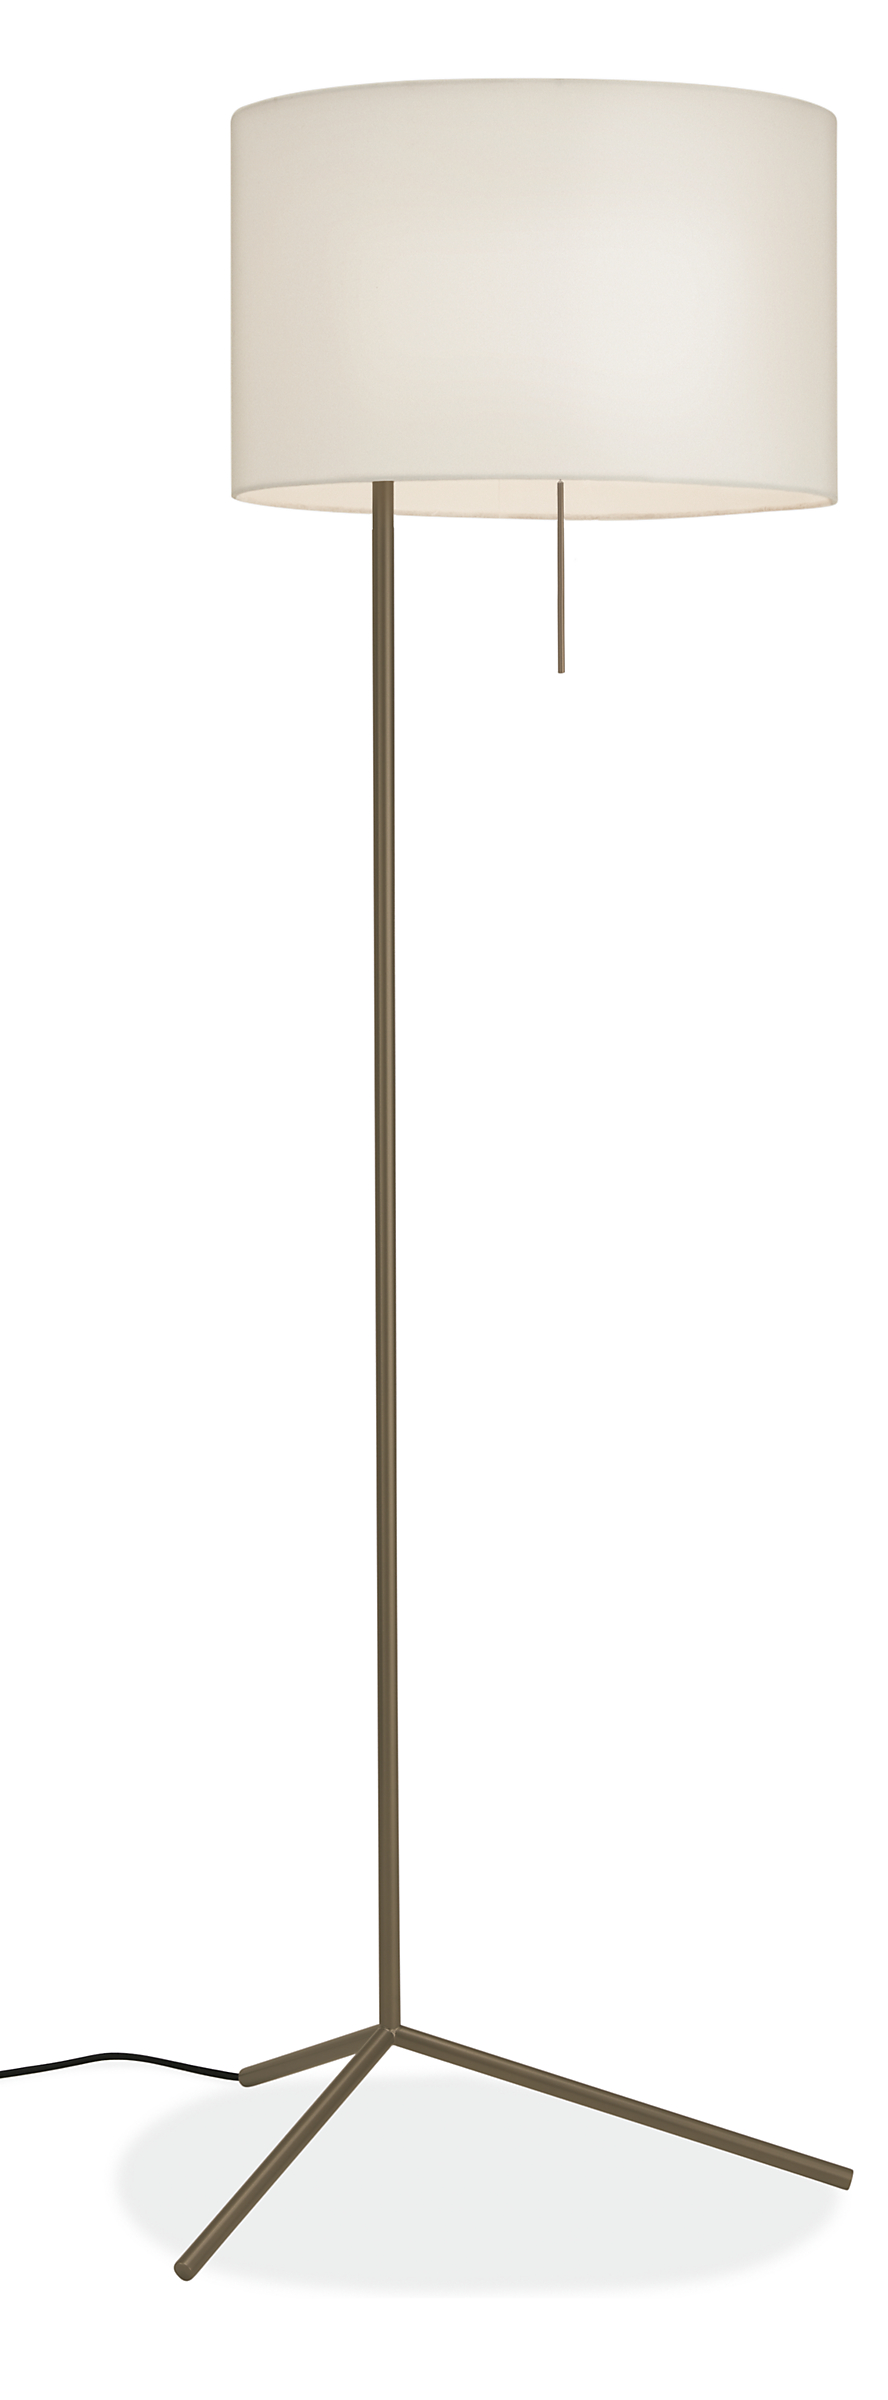 Crane 70h Floor Lamp